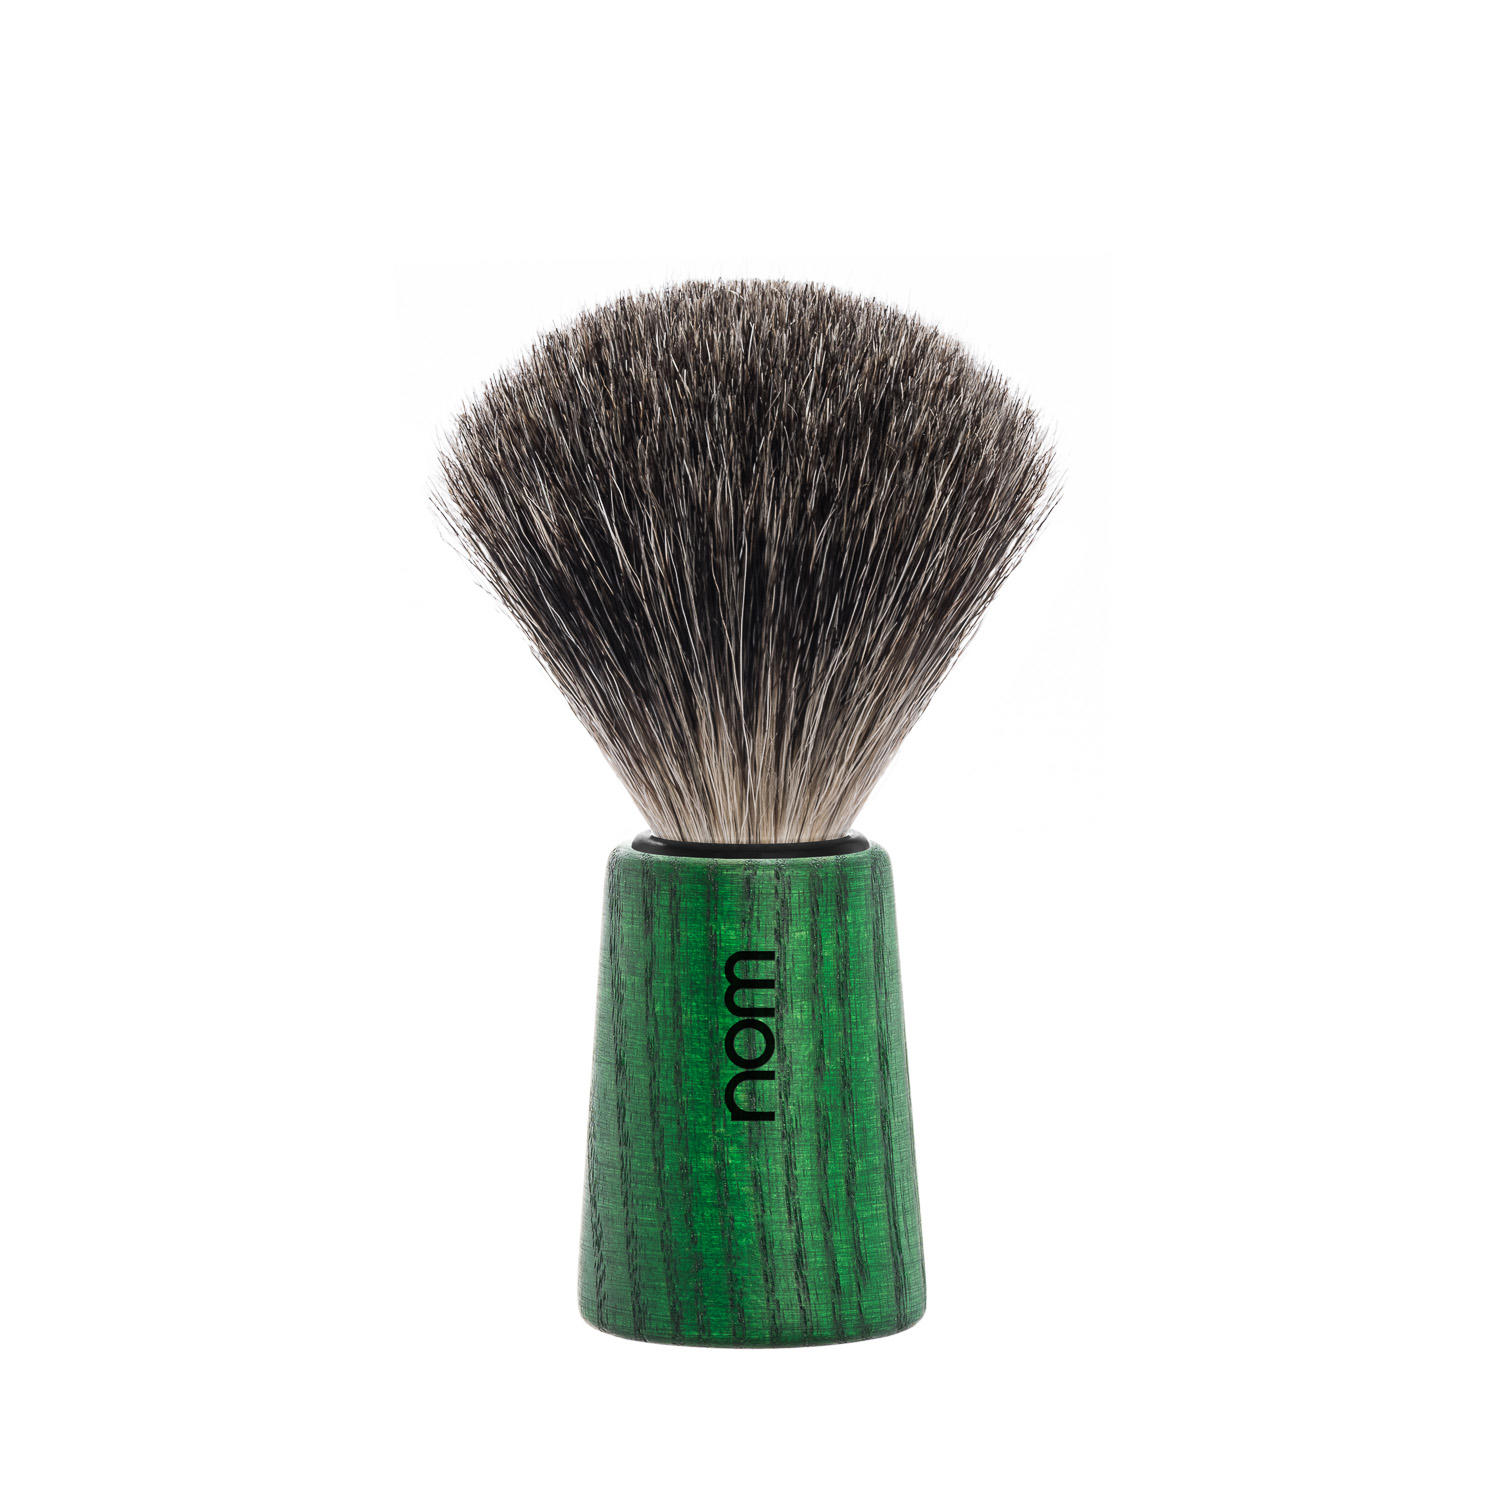 THEO81GA nom THEO, green ash, pure badger shaving brush